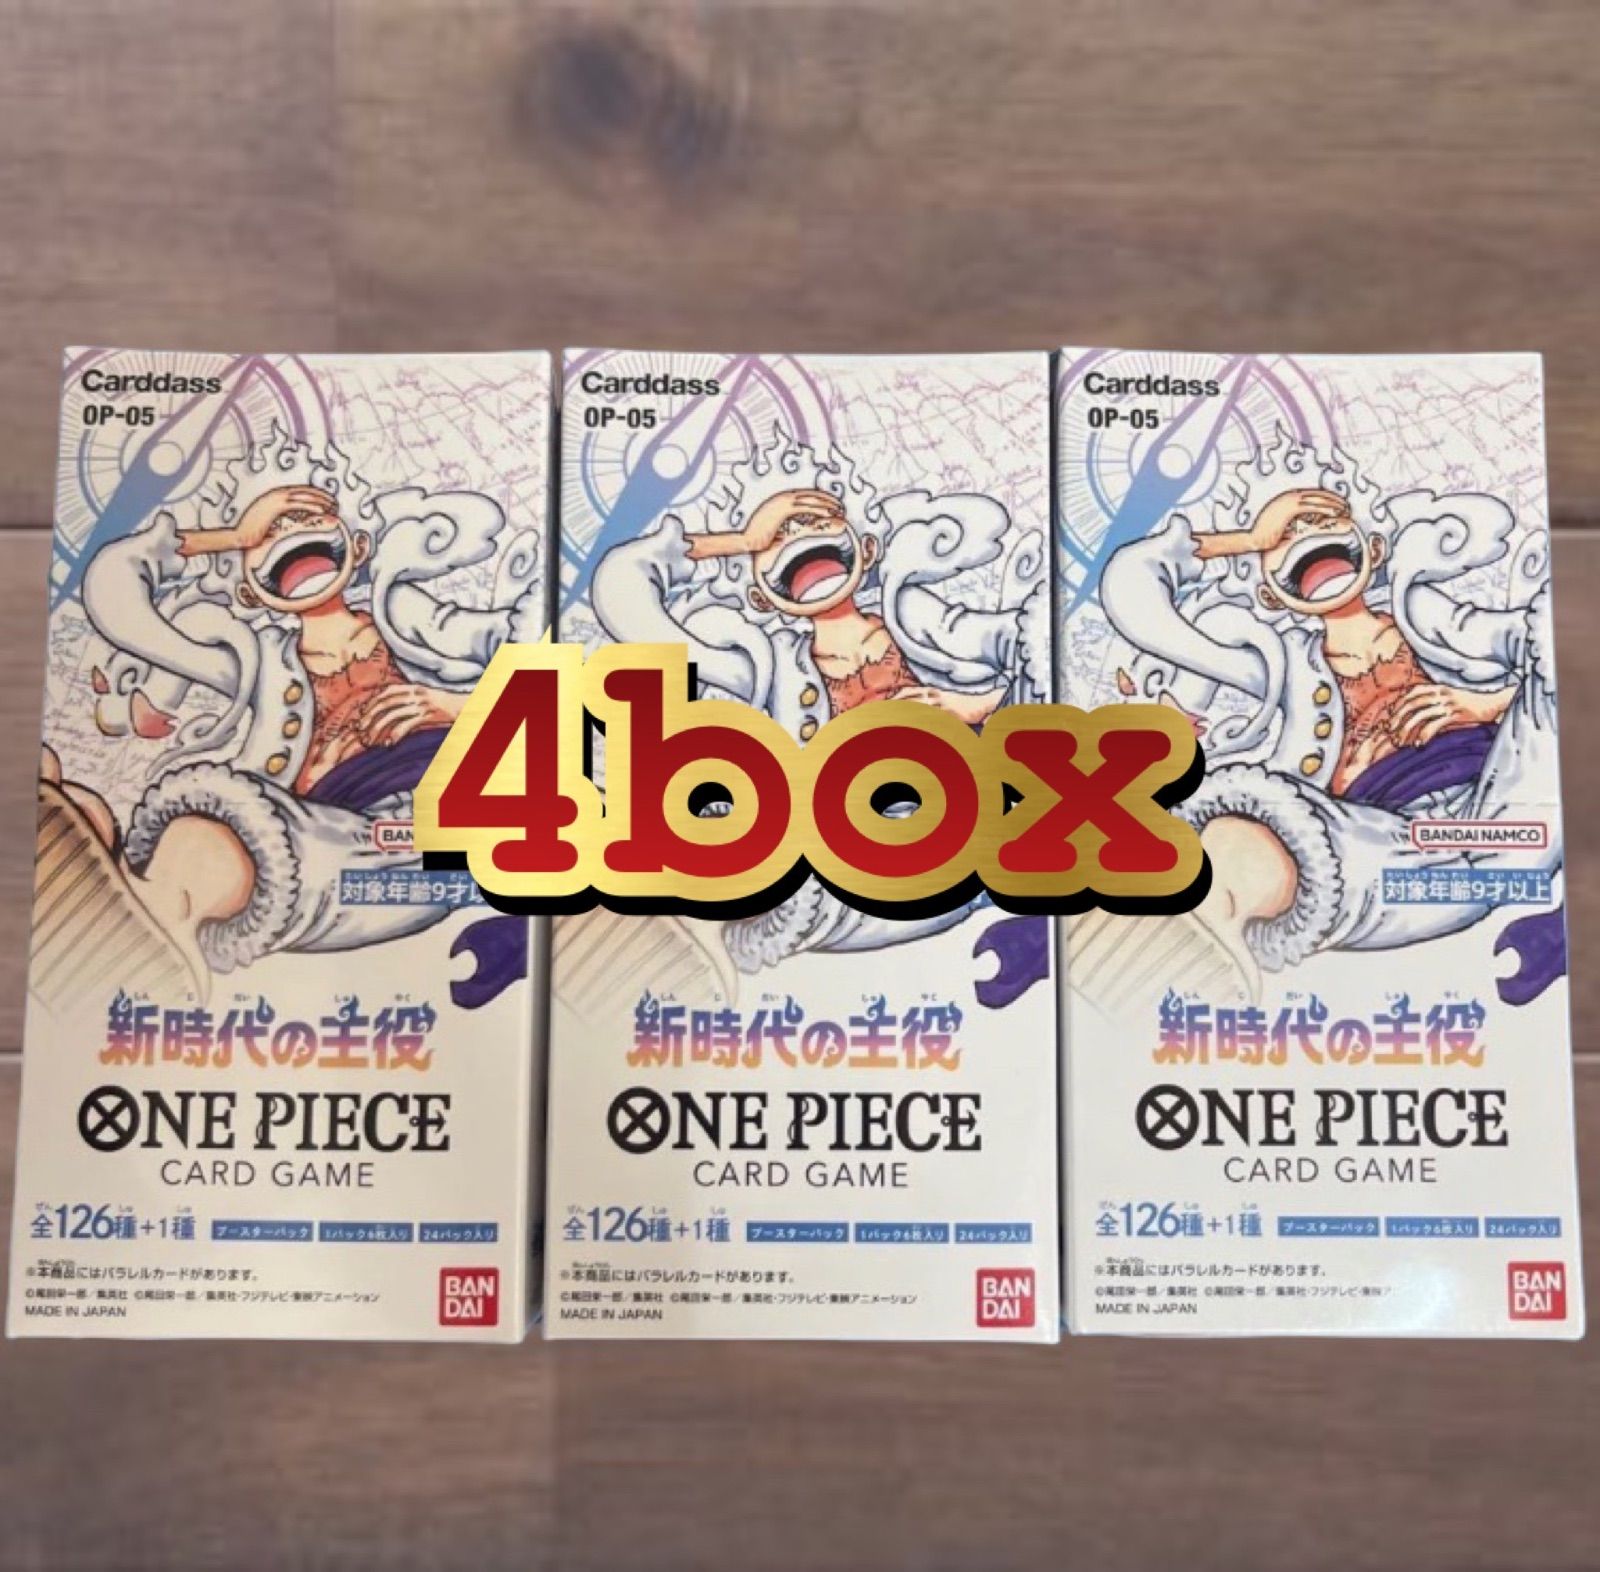 3BOX ONE PIECE カードゲーム 新時代の主役 OP-05